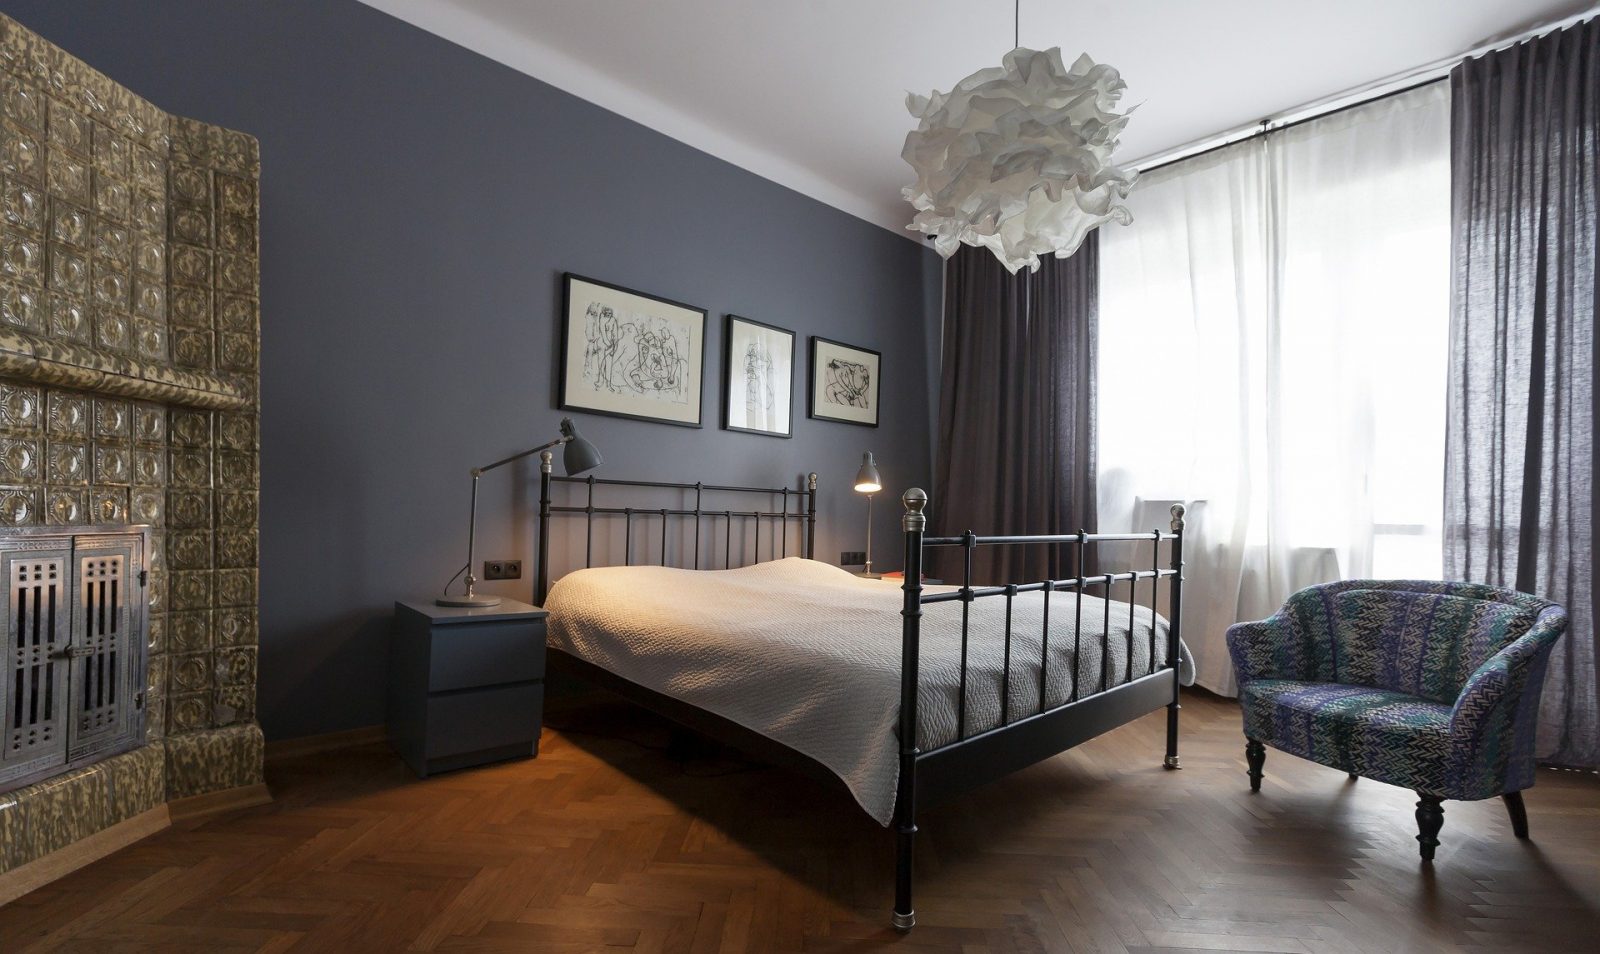 Łóżko metalowe Climaco — sposób na loftową sypialnię